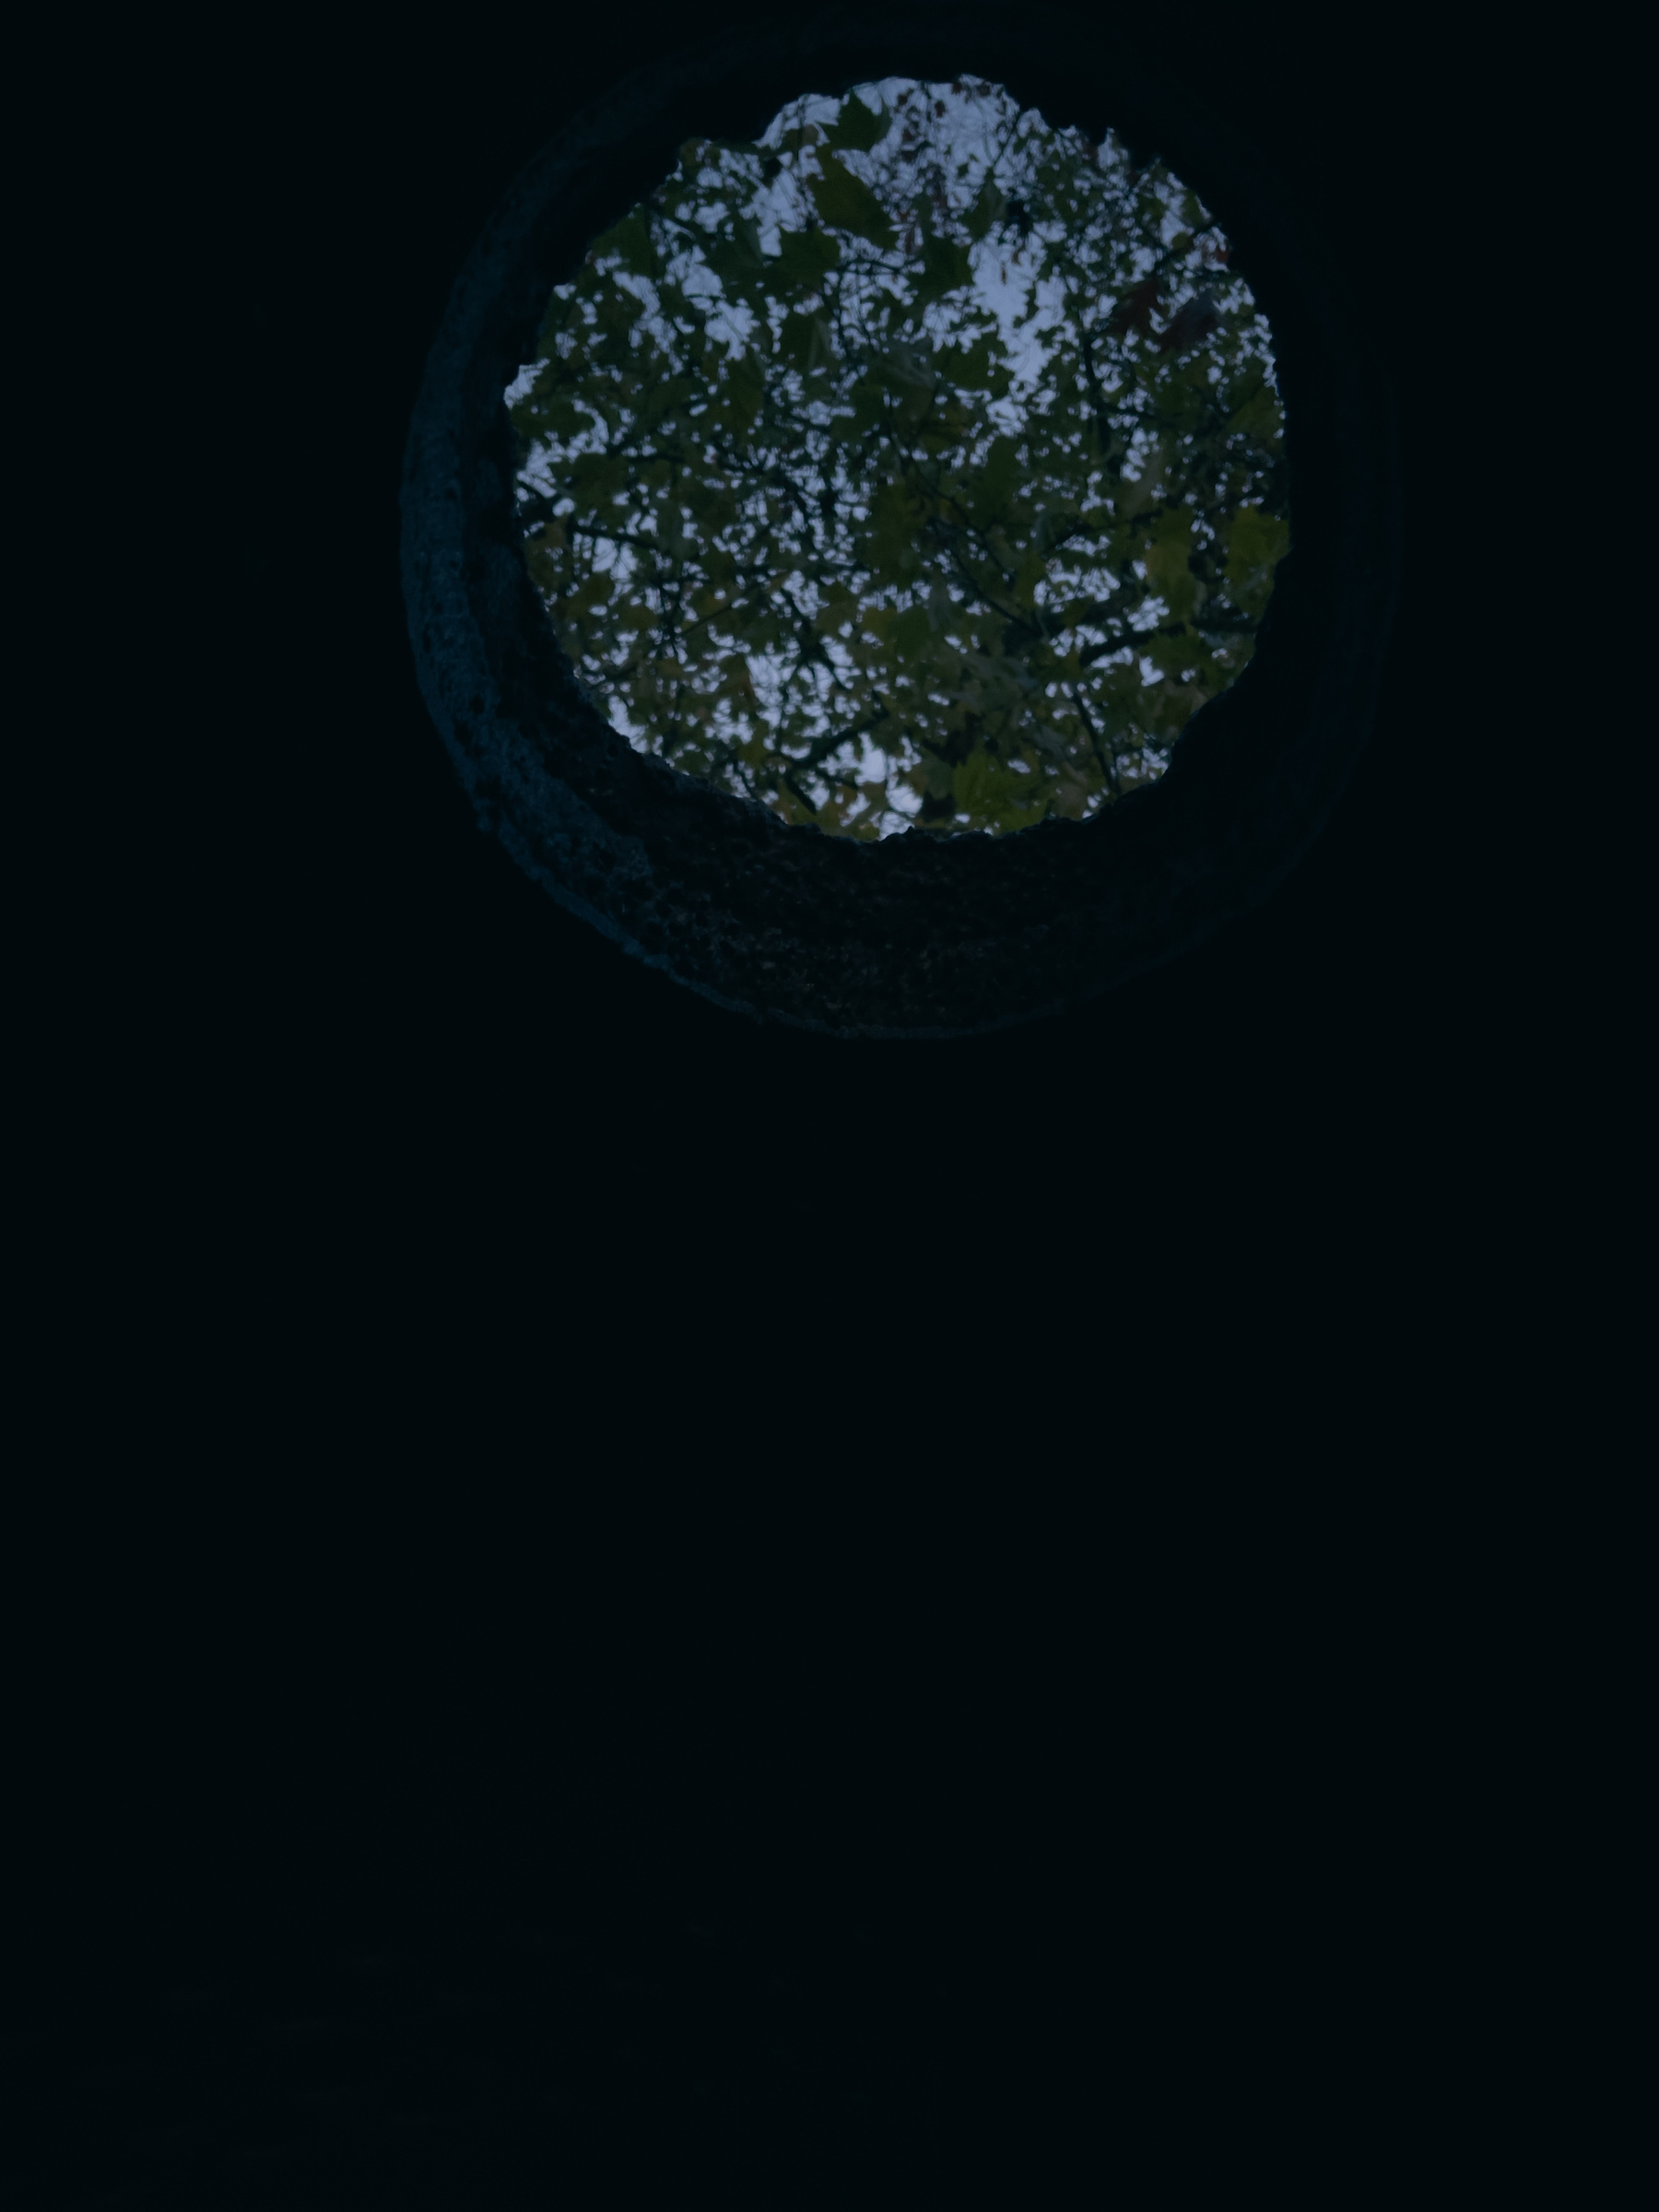 Circular hole in dark enclosure, tree branches visible through hole.